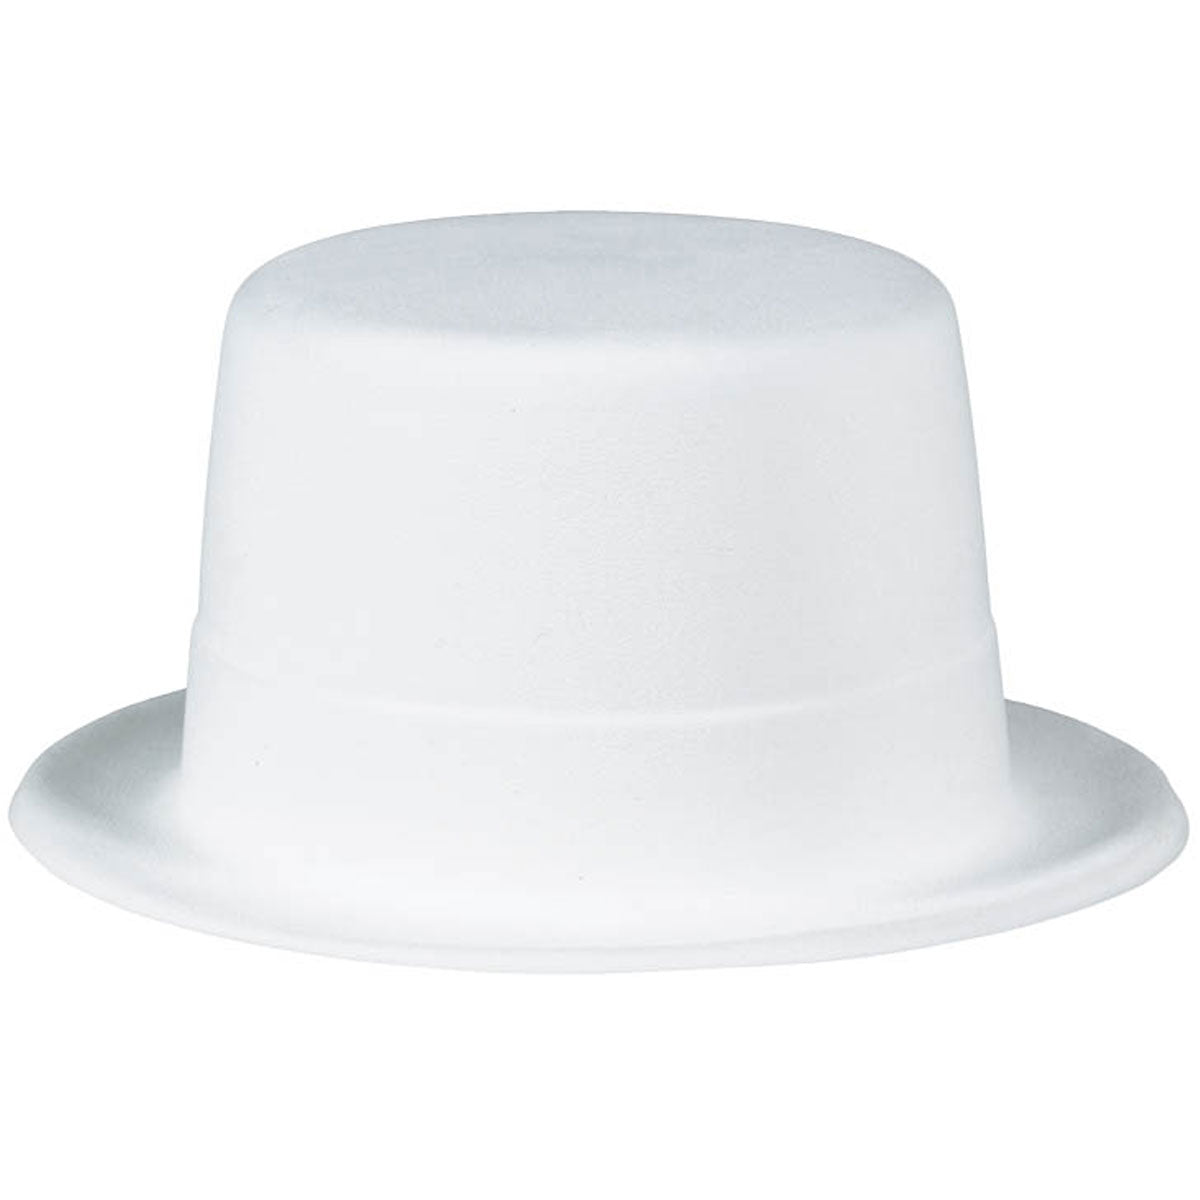 White Felt Top Hat Costumes & Apparel - Party Centre